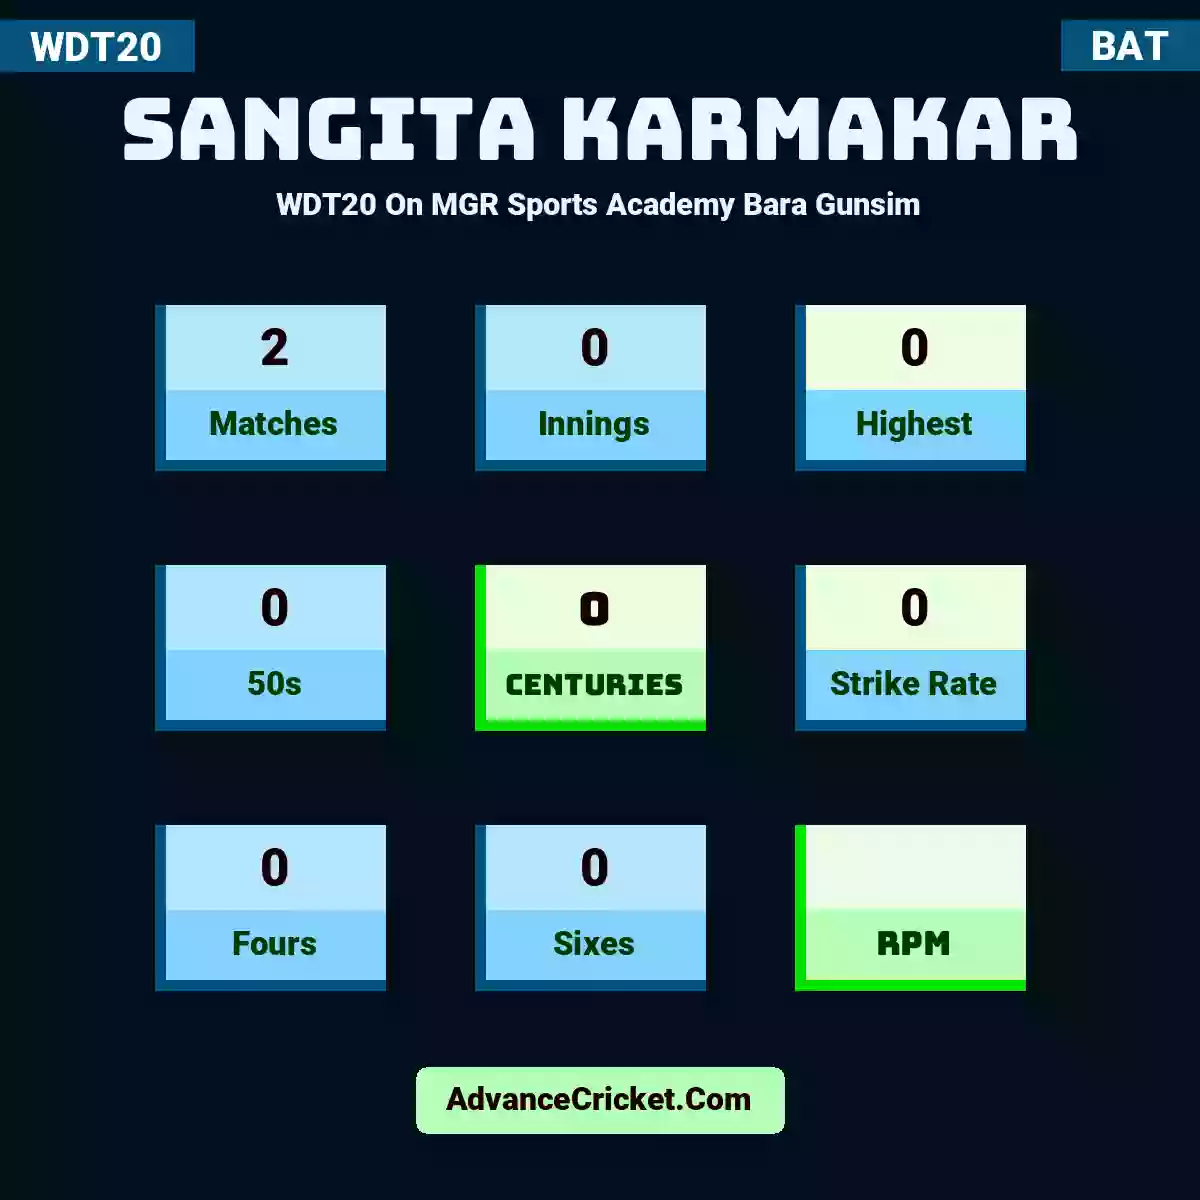 Sangita Karmakar WDT20  On MGR Sports Academy Bara Gunsim, Sangita Karmakar played 2 matches, scored 0 runs as highest, 0 half-centuries, and 0 centuries, with a strike rate of 0. S.Karmakar hit 0 fours and 0 sixes.